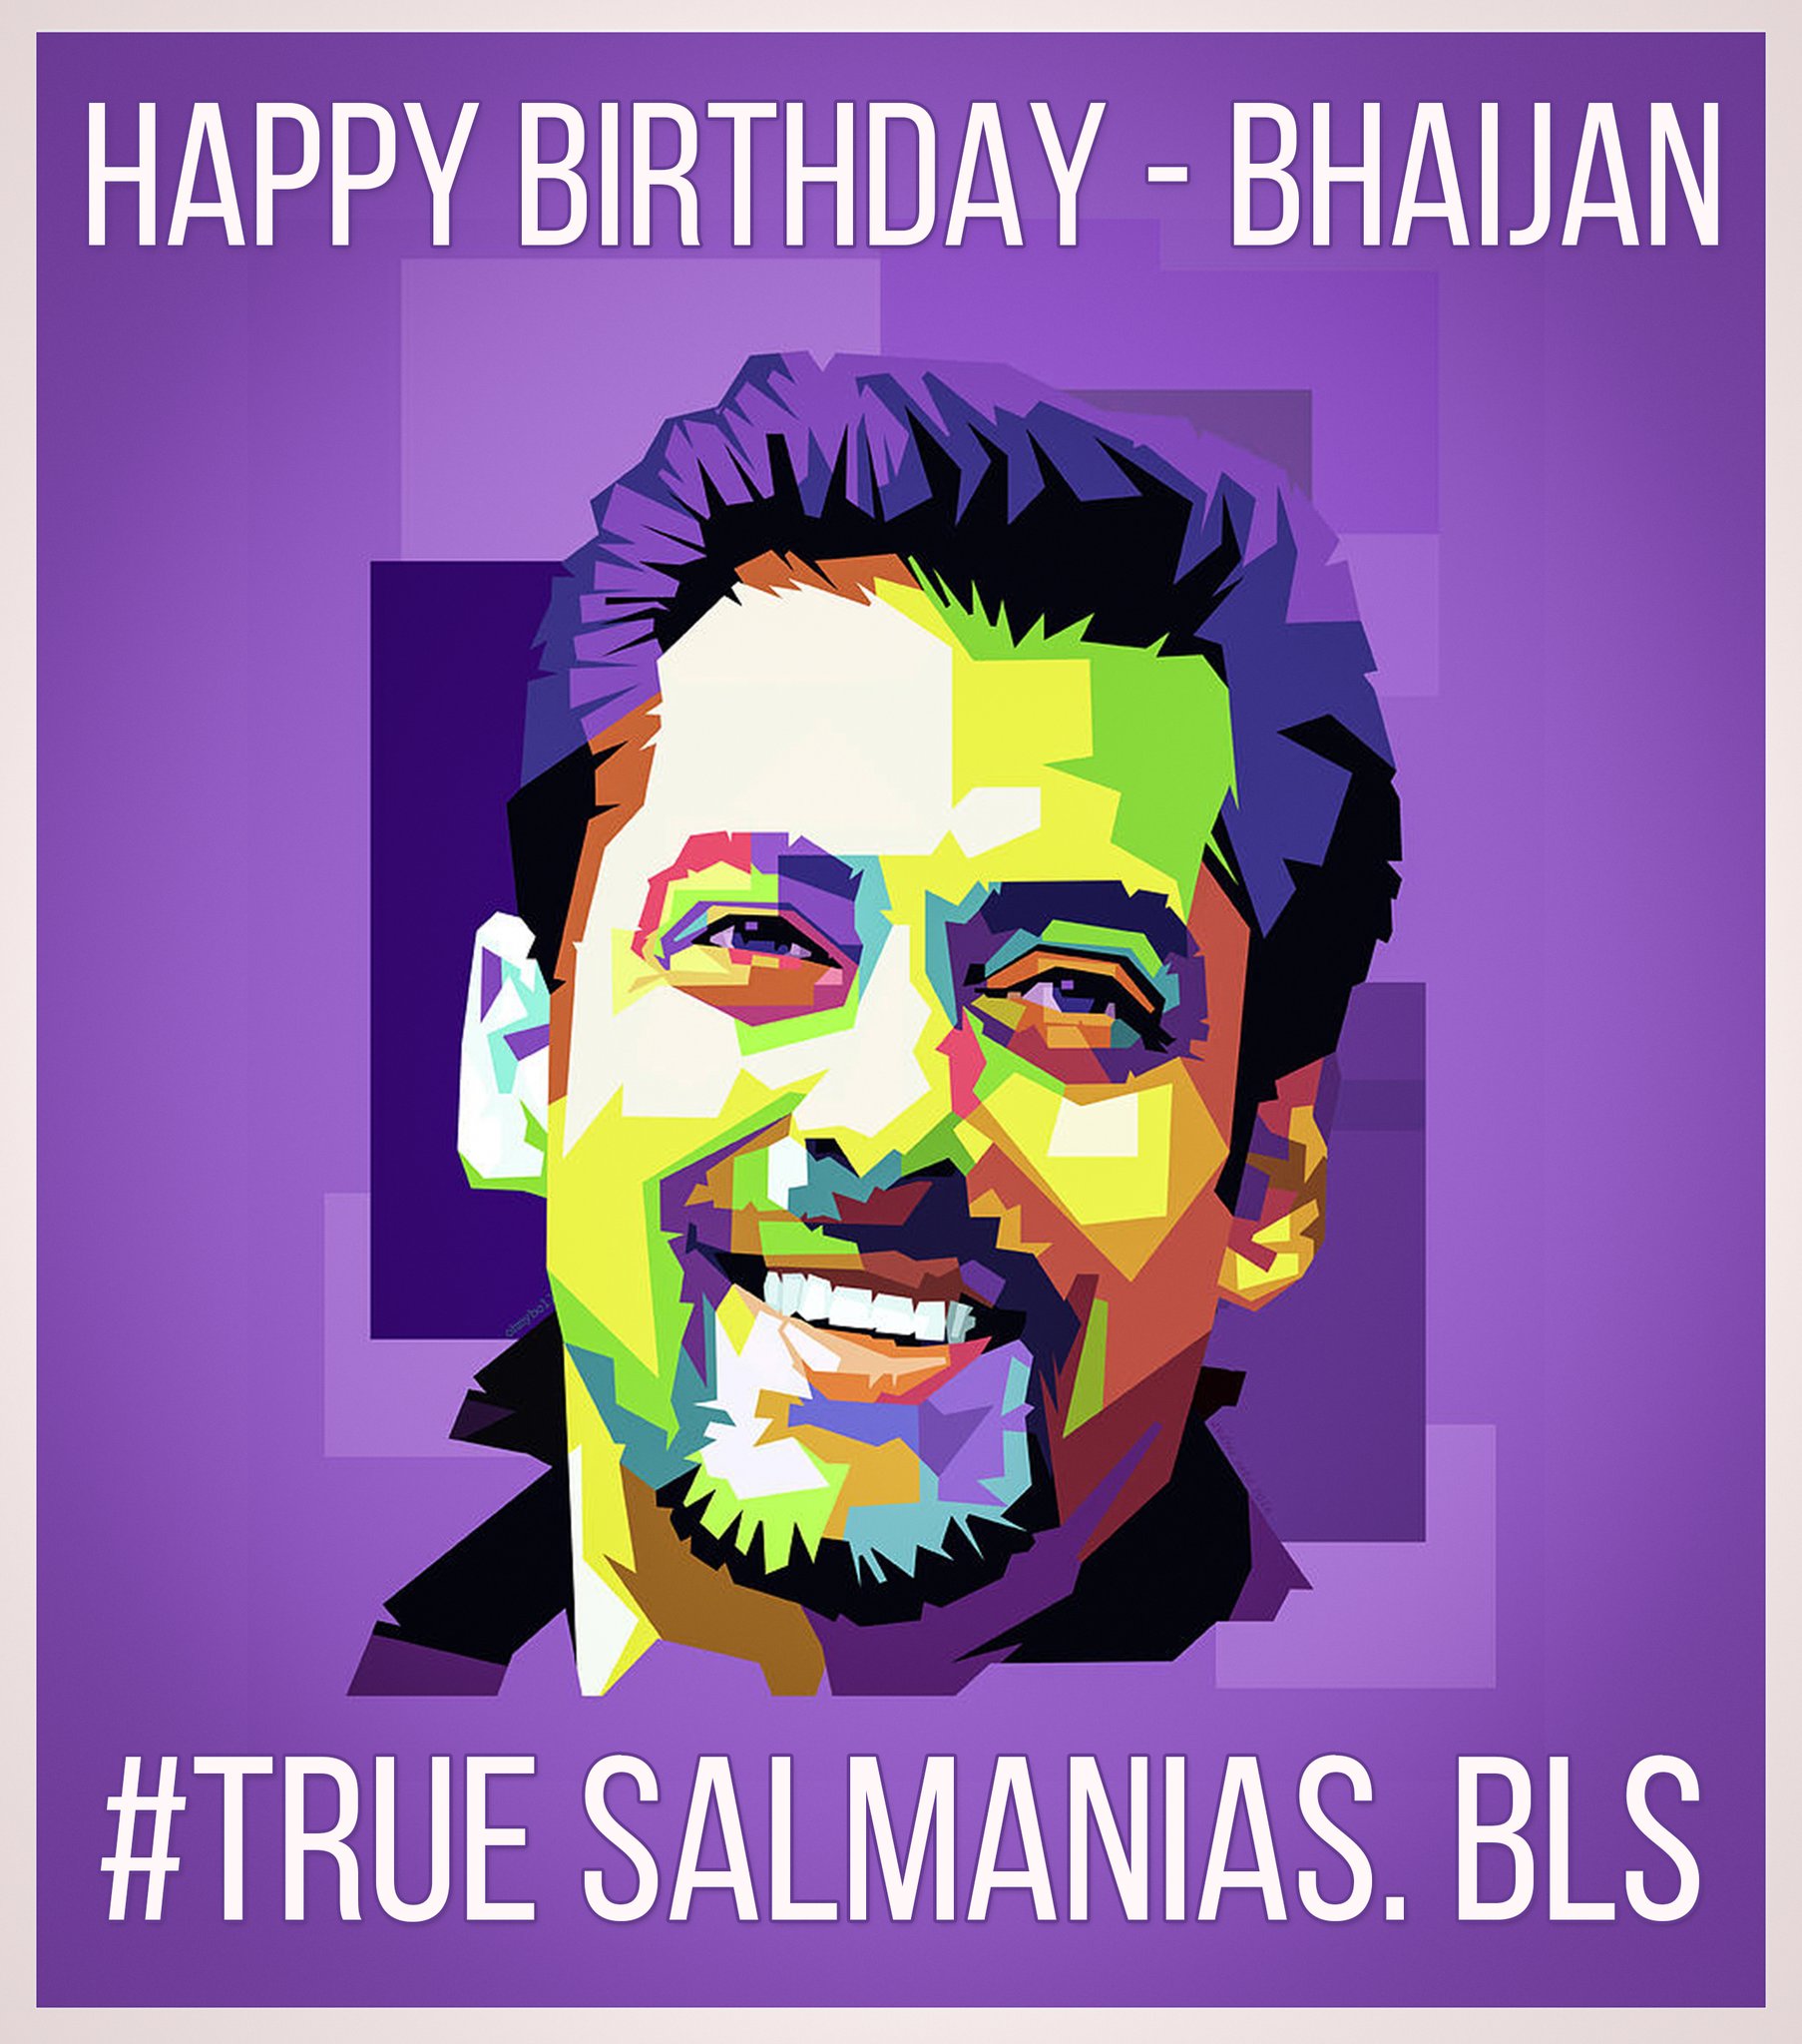 Happy birthday bhaijan Sultan of Bollywood Salman Khan 
Love you  